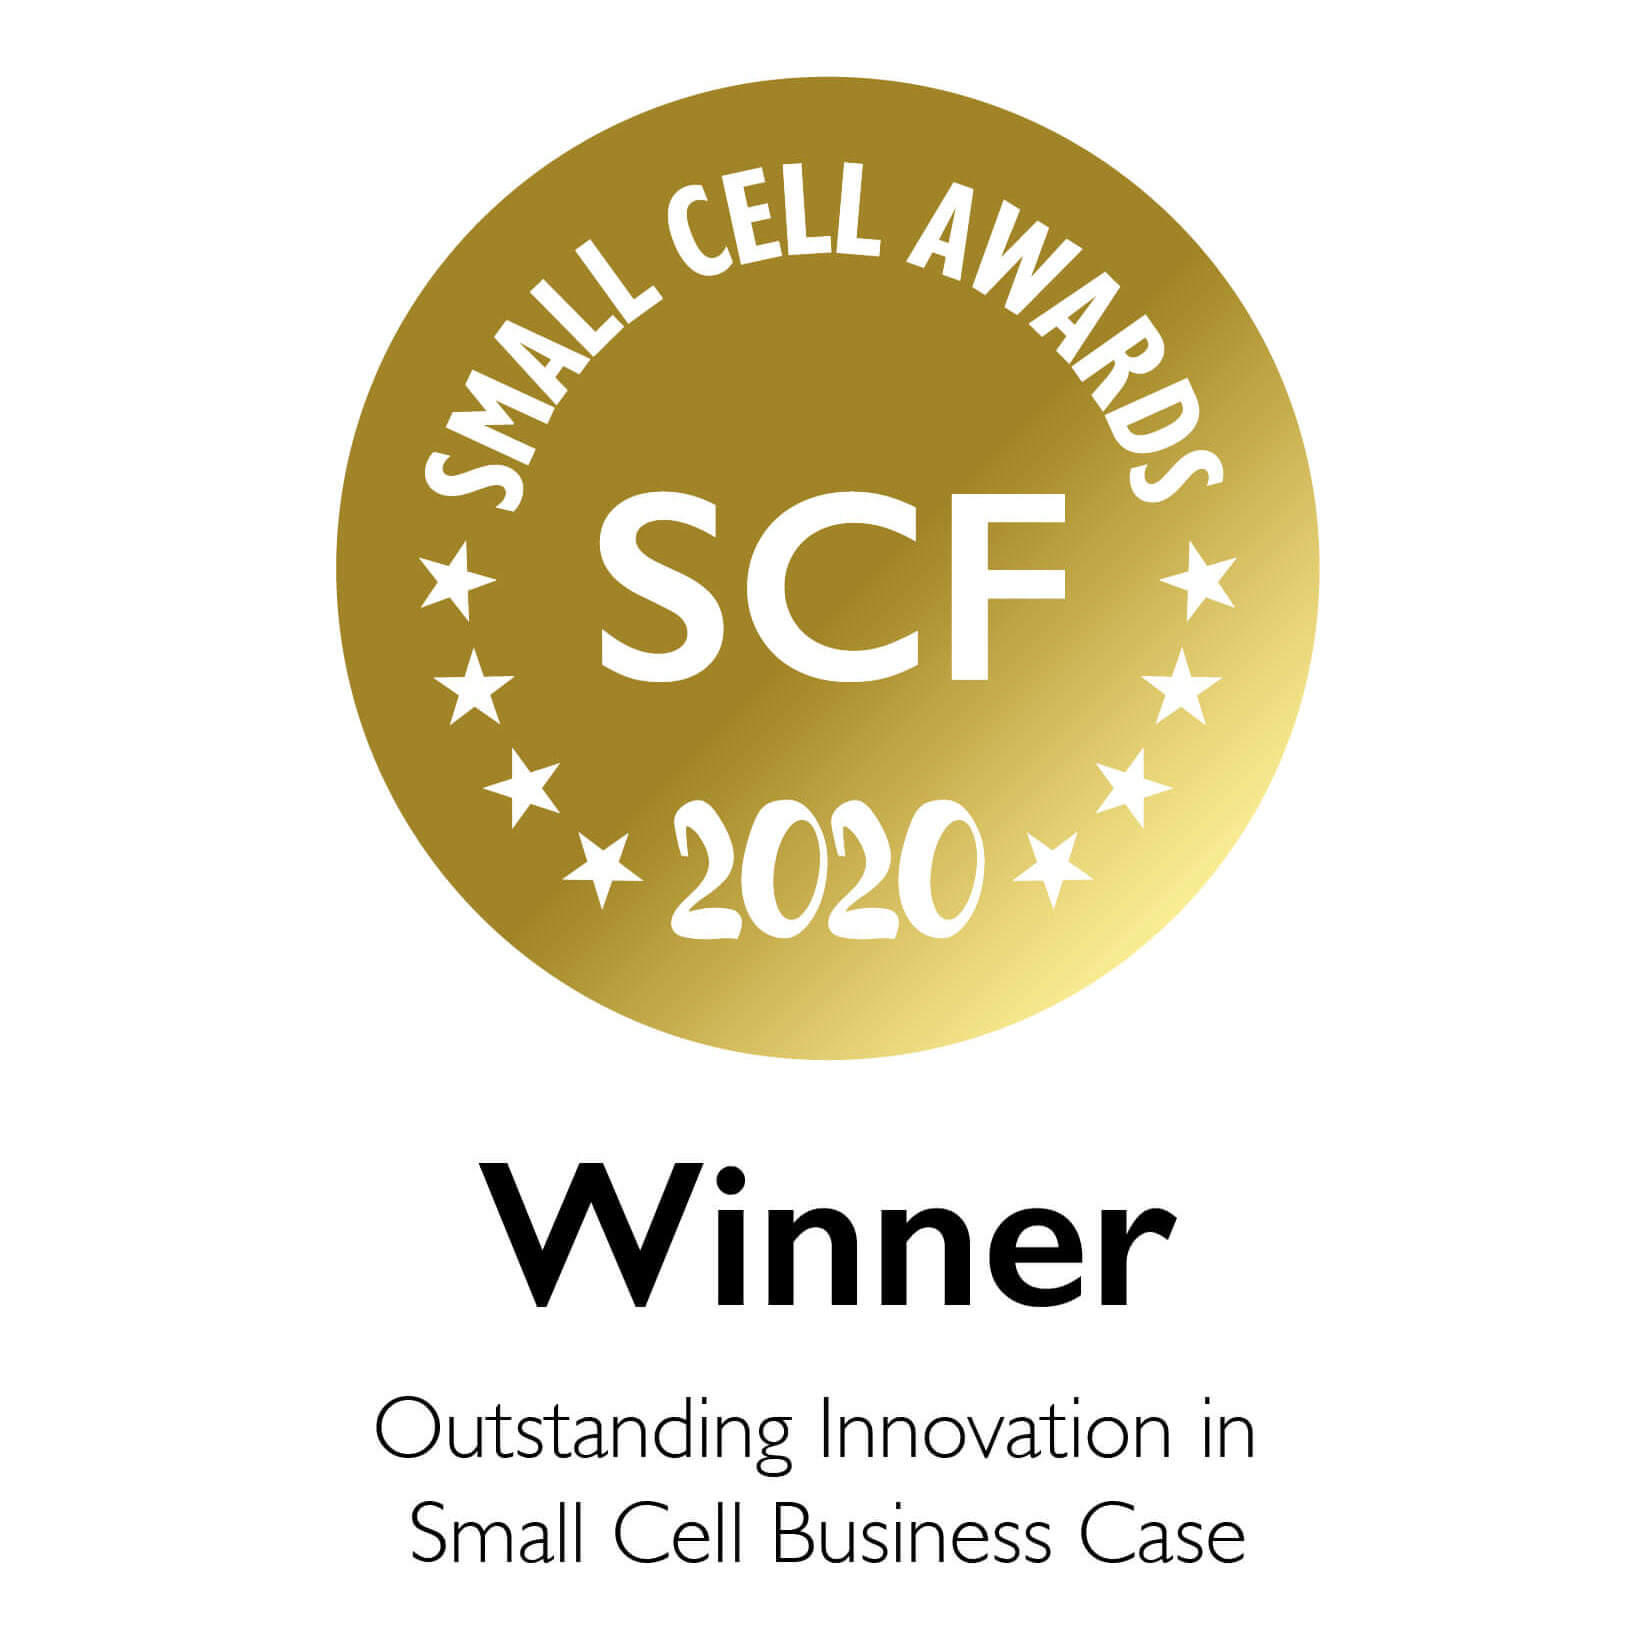 SCF Award medallion for outstanding innovation in Small Cell Business Case